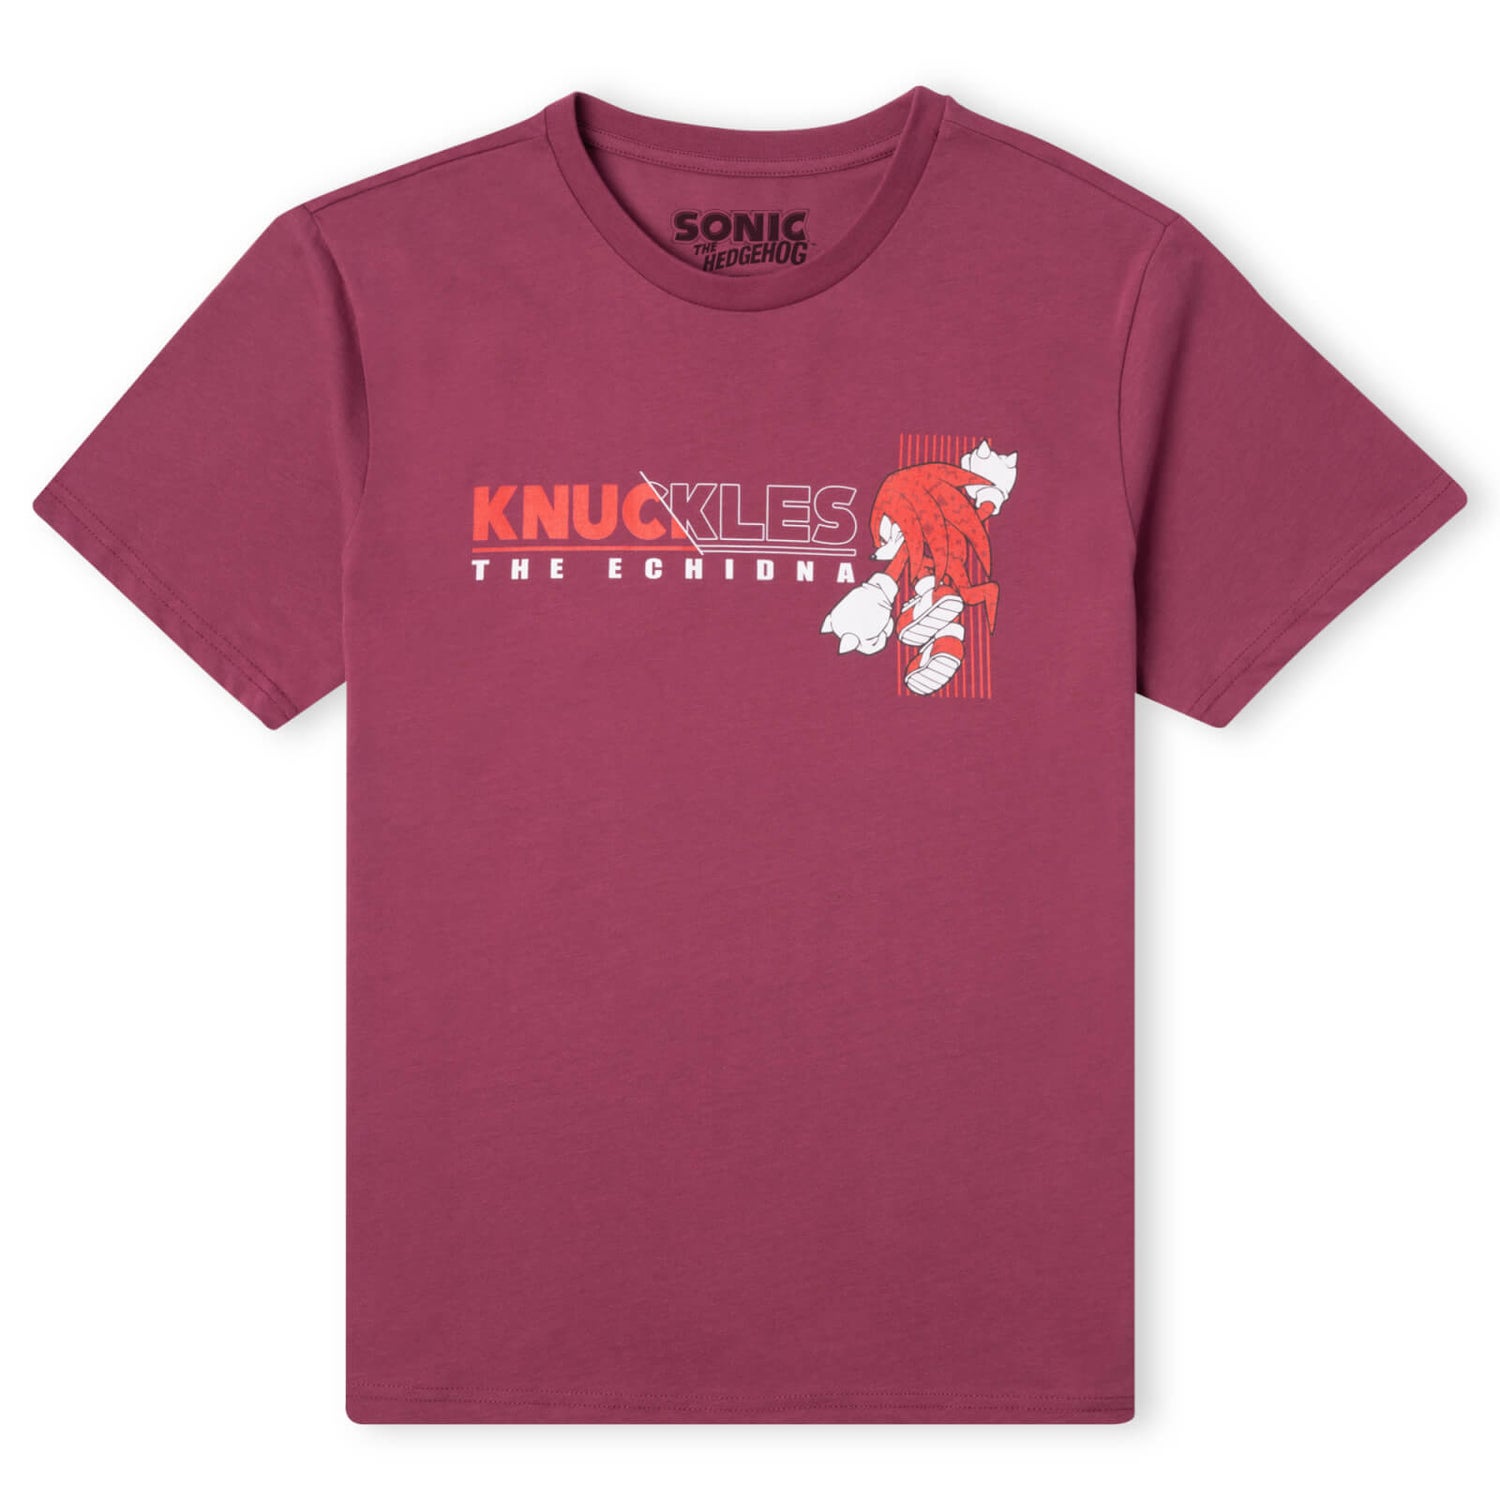 Camiseta The Echidna Knuckles de Sonic The Hedgehog para hombre - Burdeos